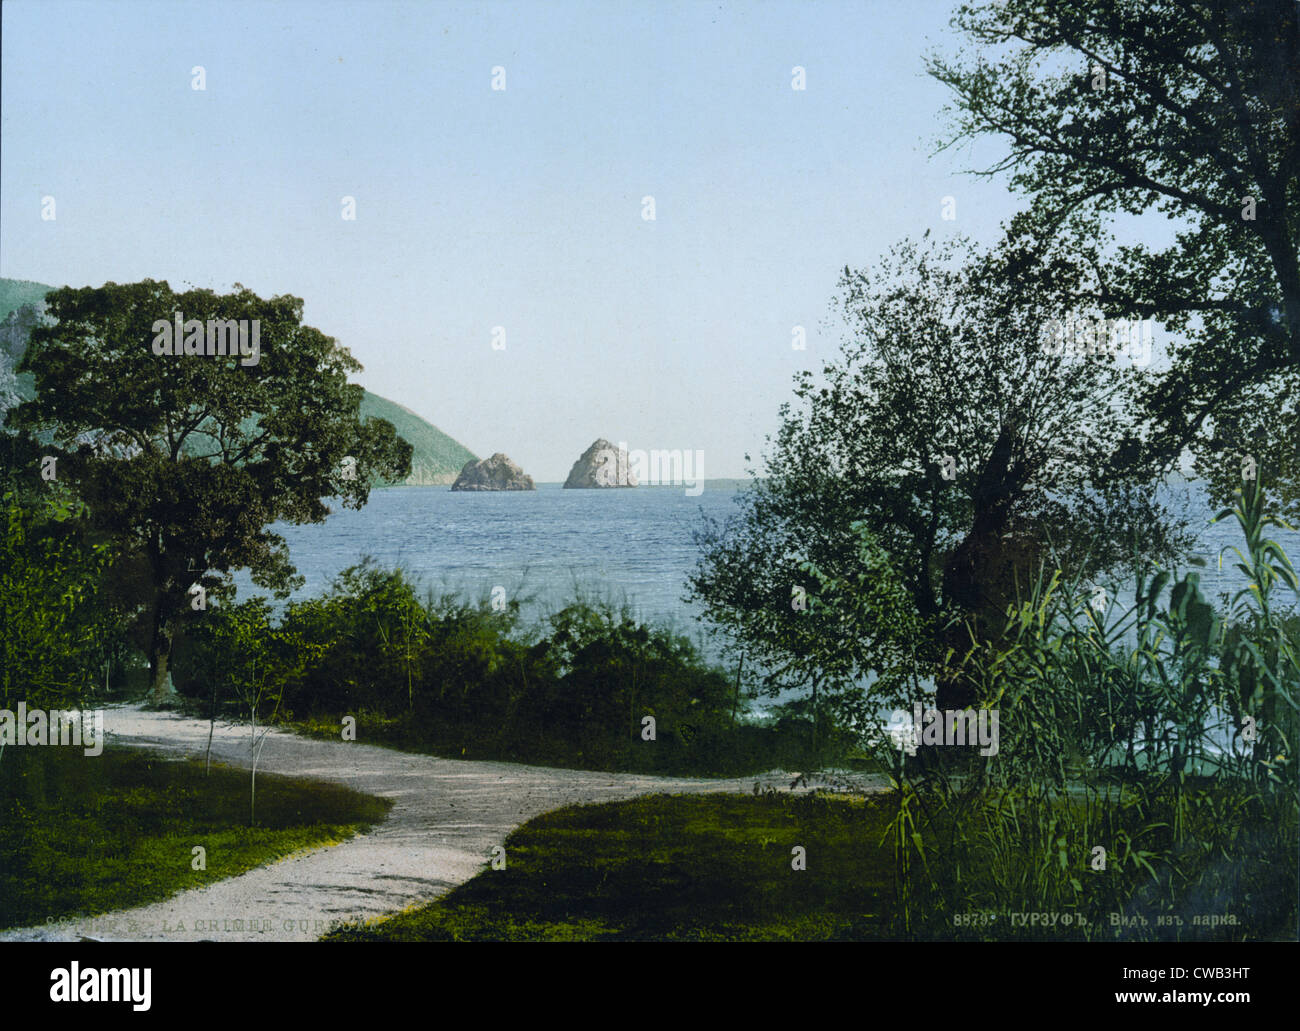 Russia, Gursuff (aka Gurzuf), Crimea, photochrom, circa 1900. Stock Photo